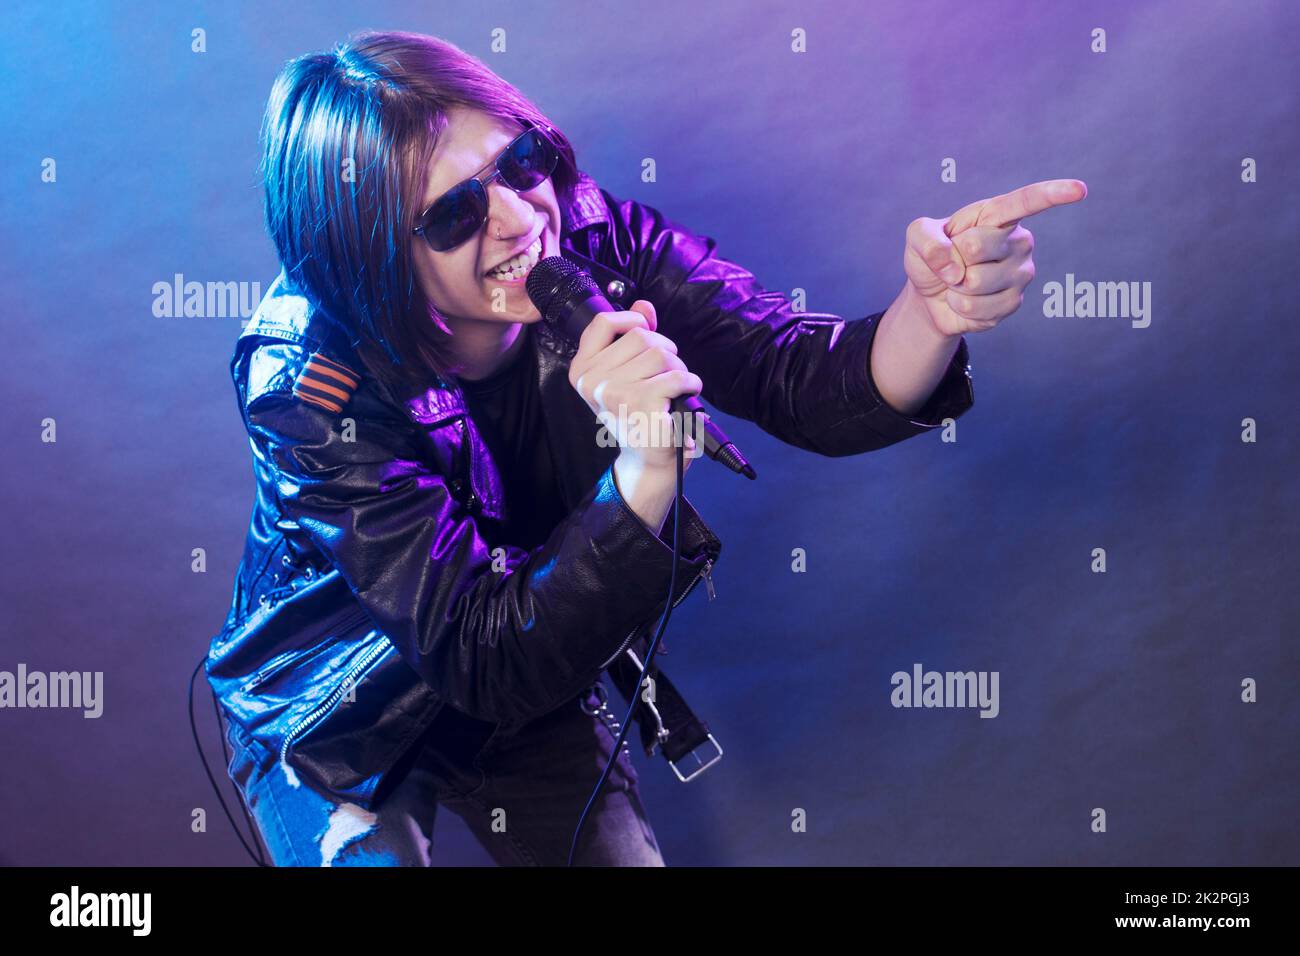 singing emo guy on stage Stock Photo